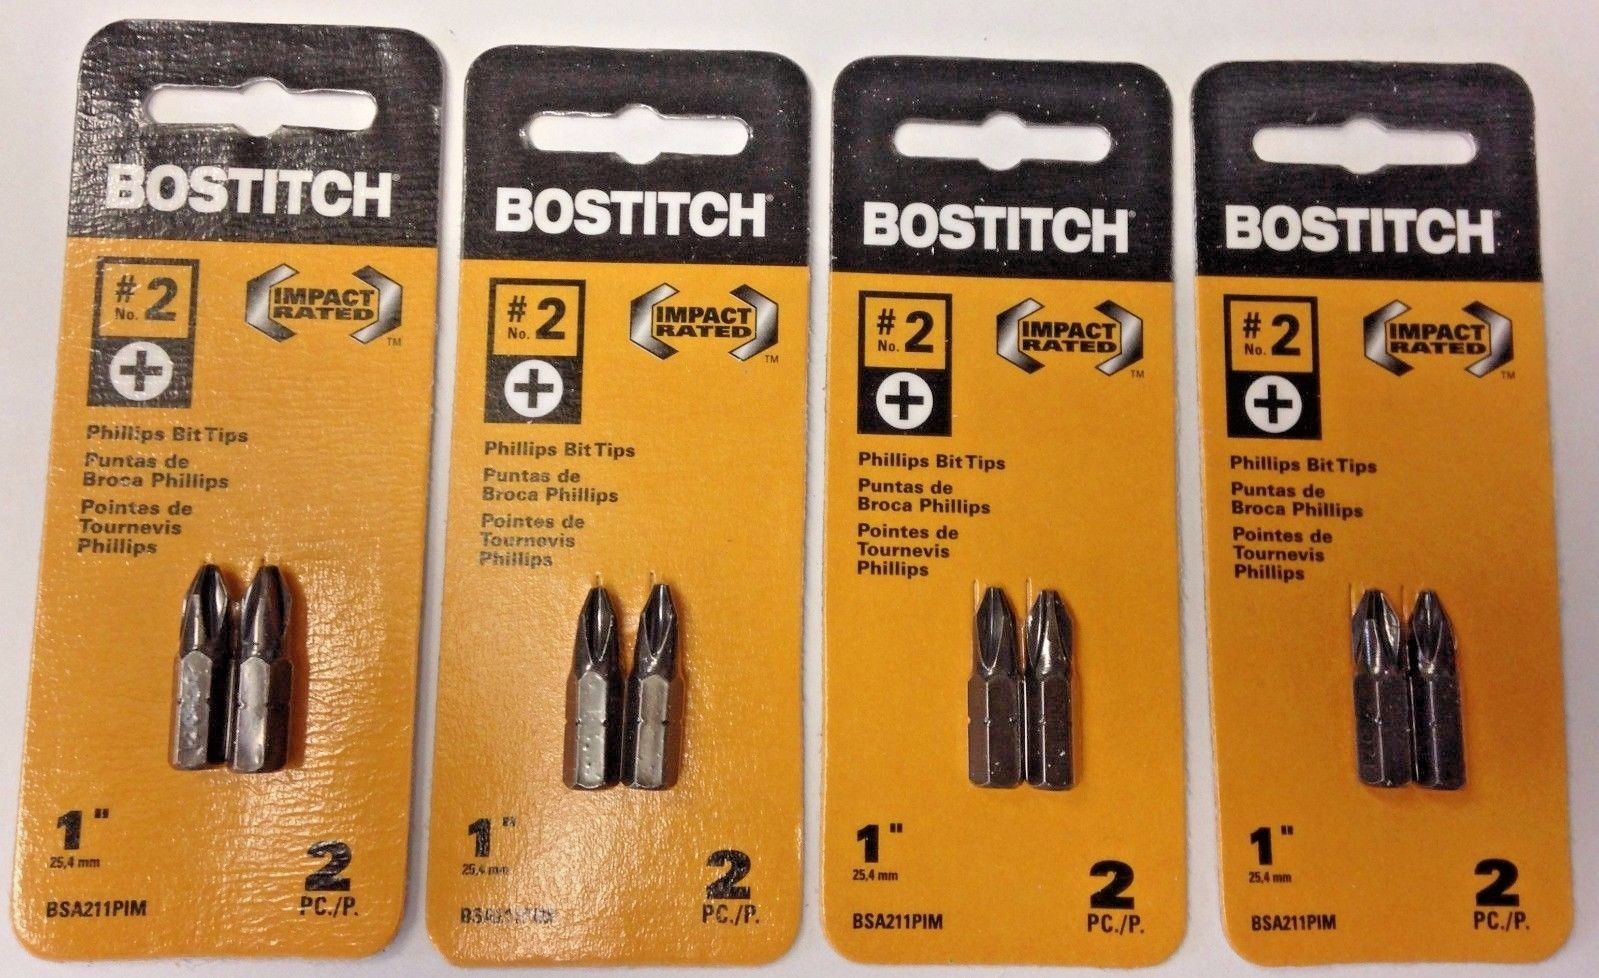 Bostitch BSA211PIM #2 1" Phillips Bit Tips 4-2 Packs